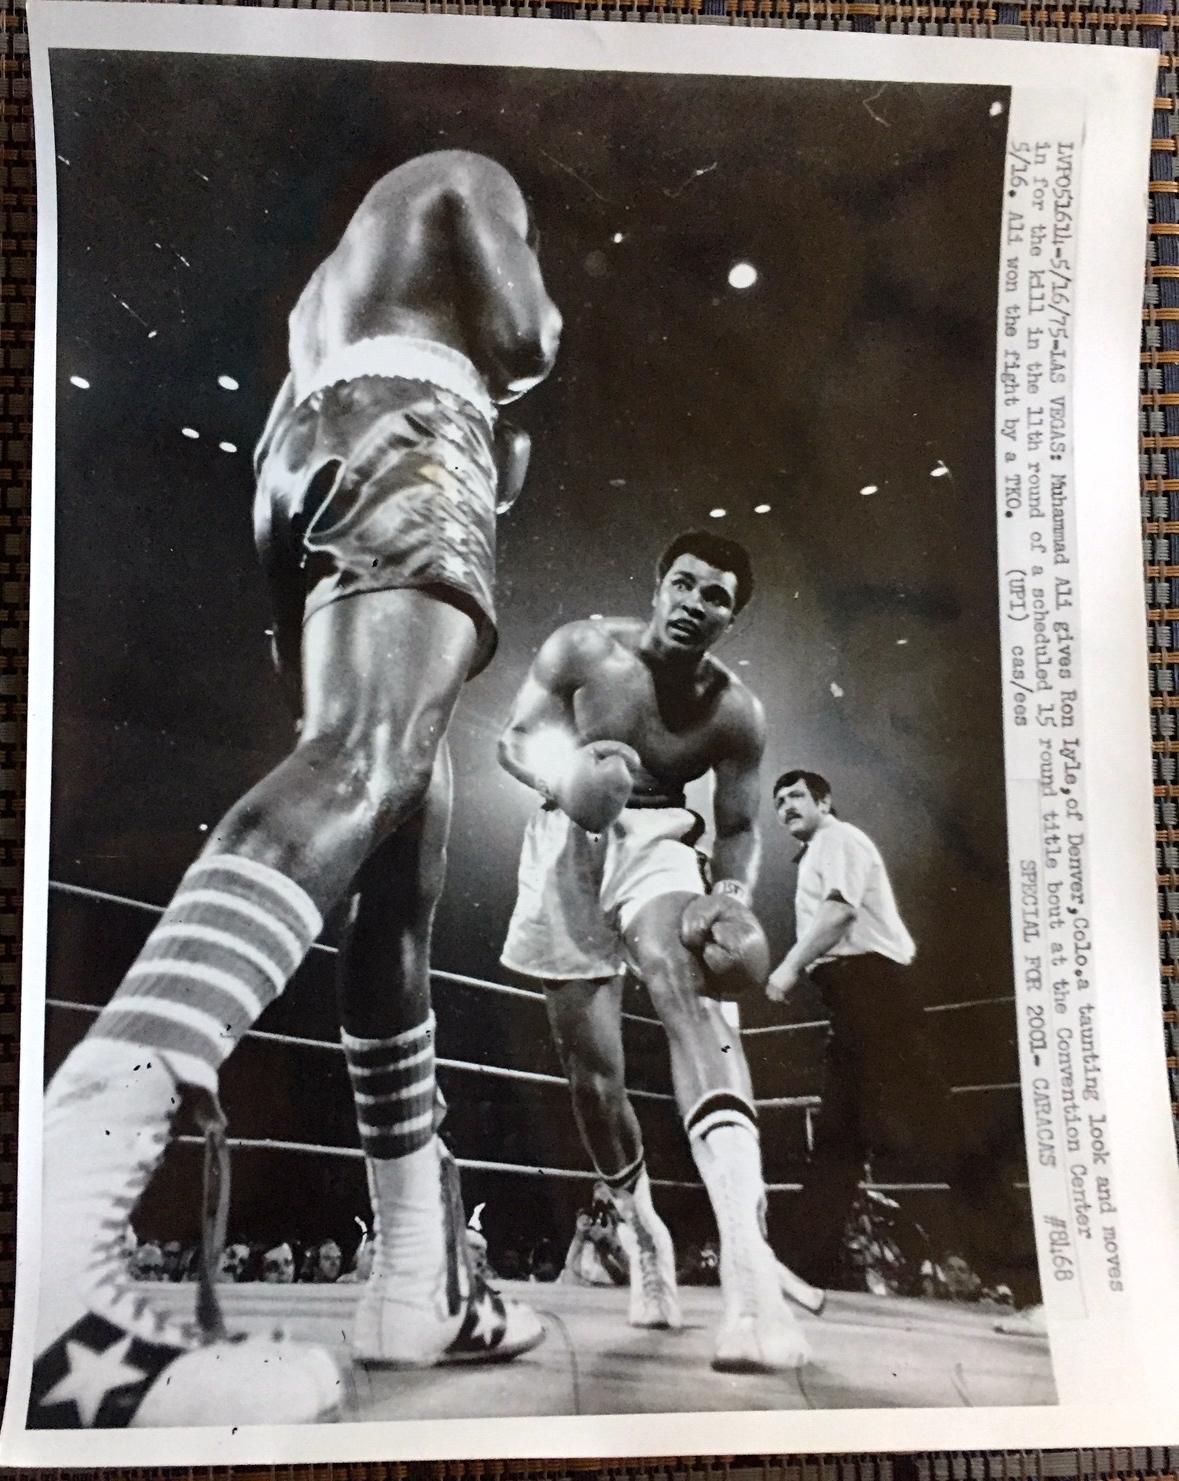 Mauhammed Ali/Ron Lyle Las Vegas 5//16/75 - Photograph by Unknown